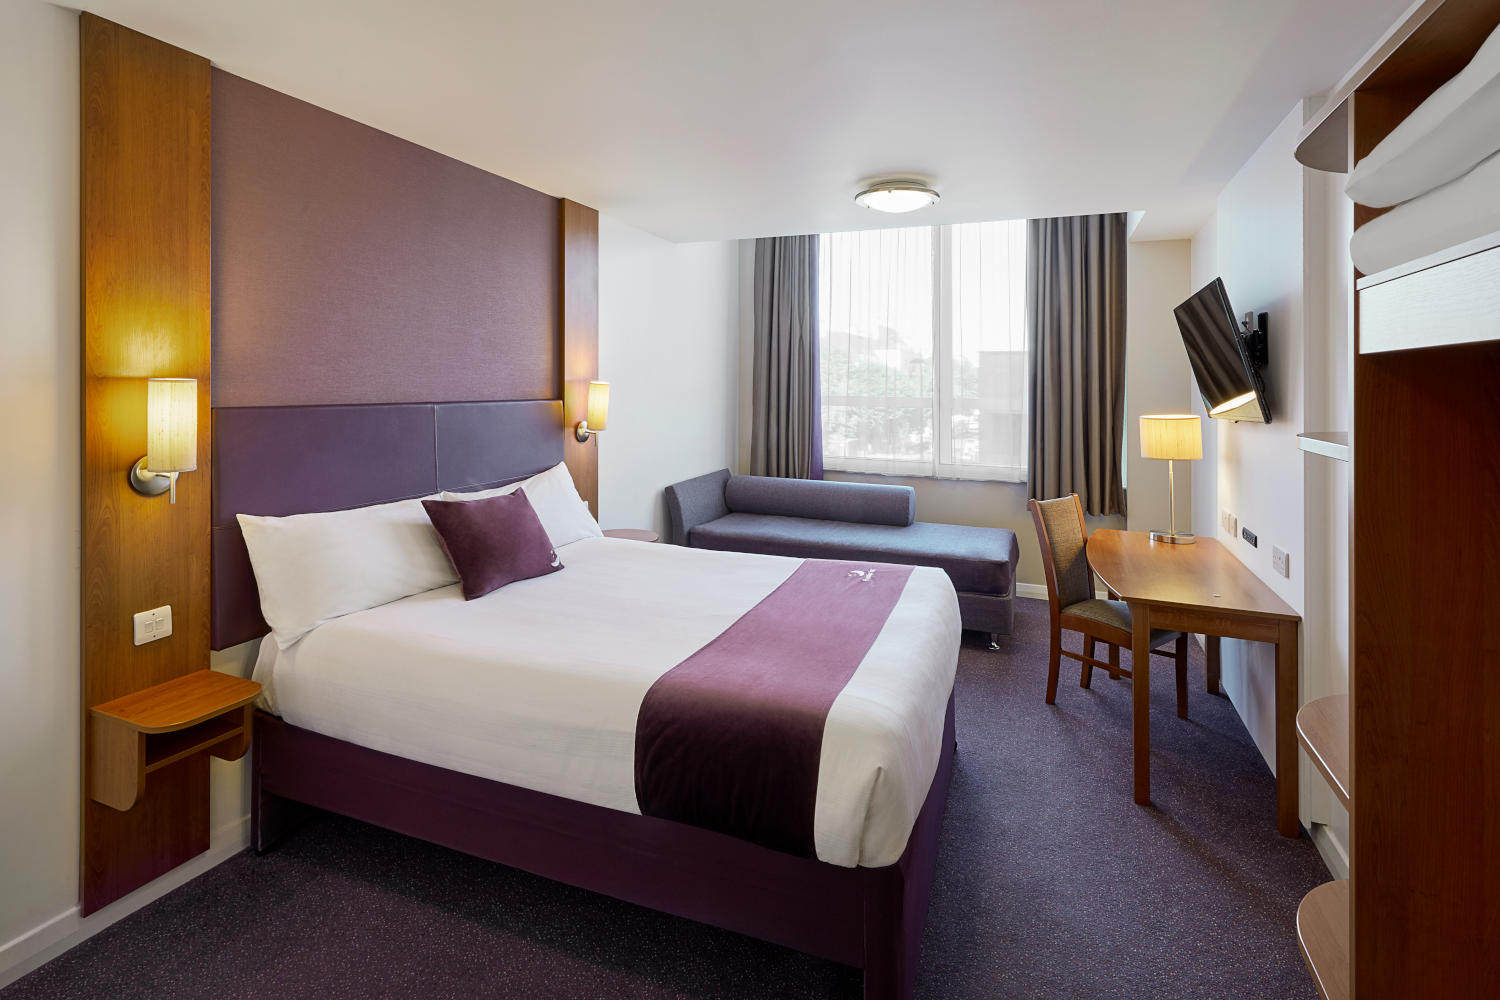 Premier Inn bedroom Premier Inn Paignton South (Brixham Road) hotel Paignton 03333 219248